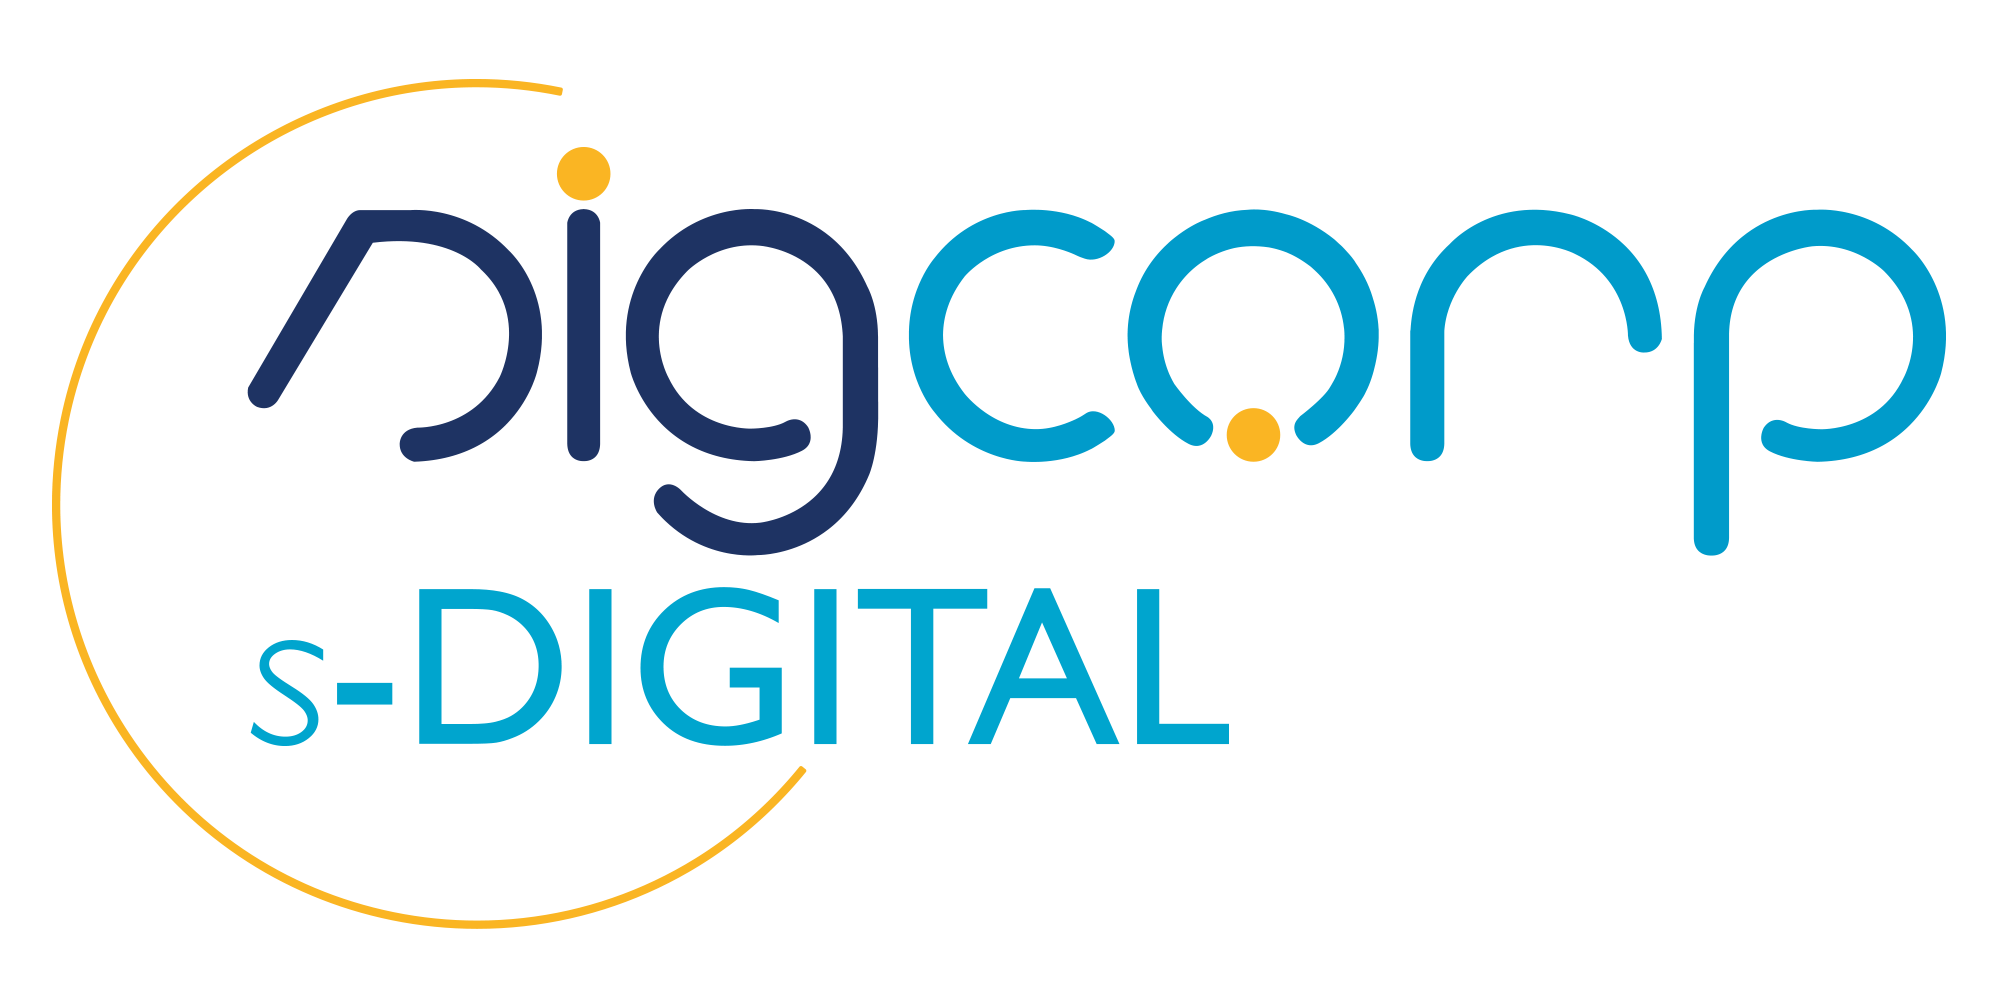 Logo Sigcorp S-Digital